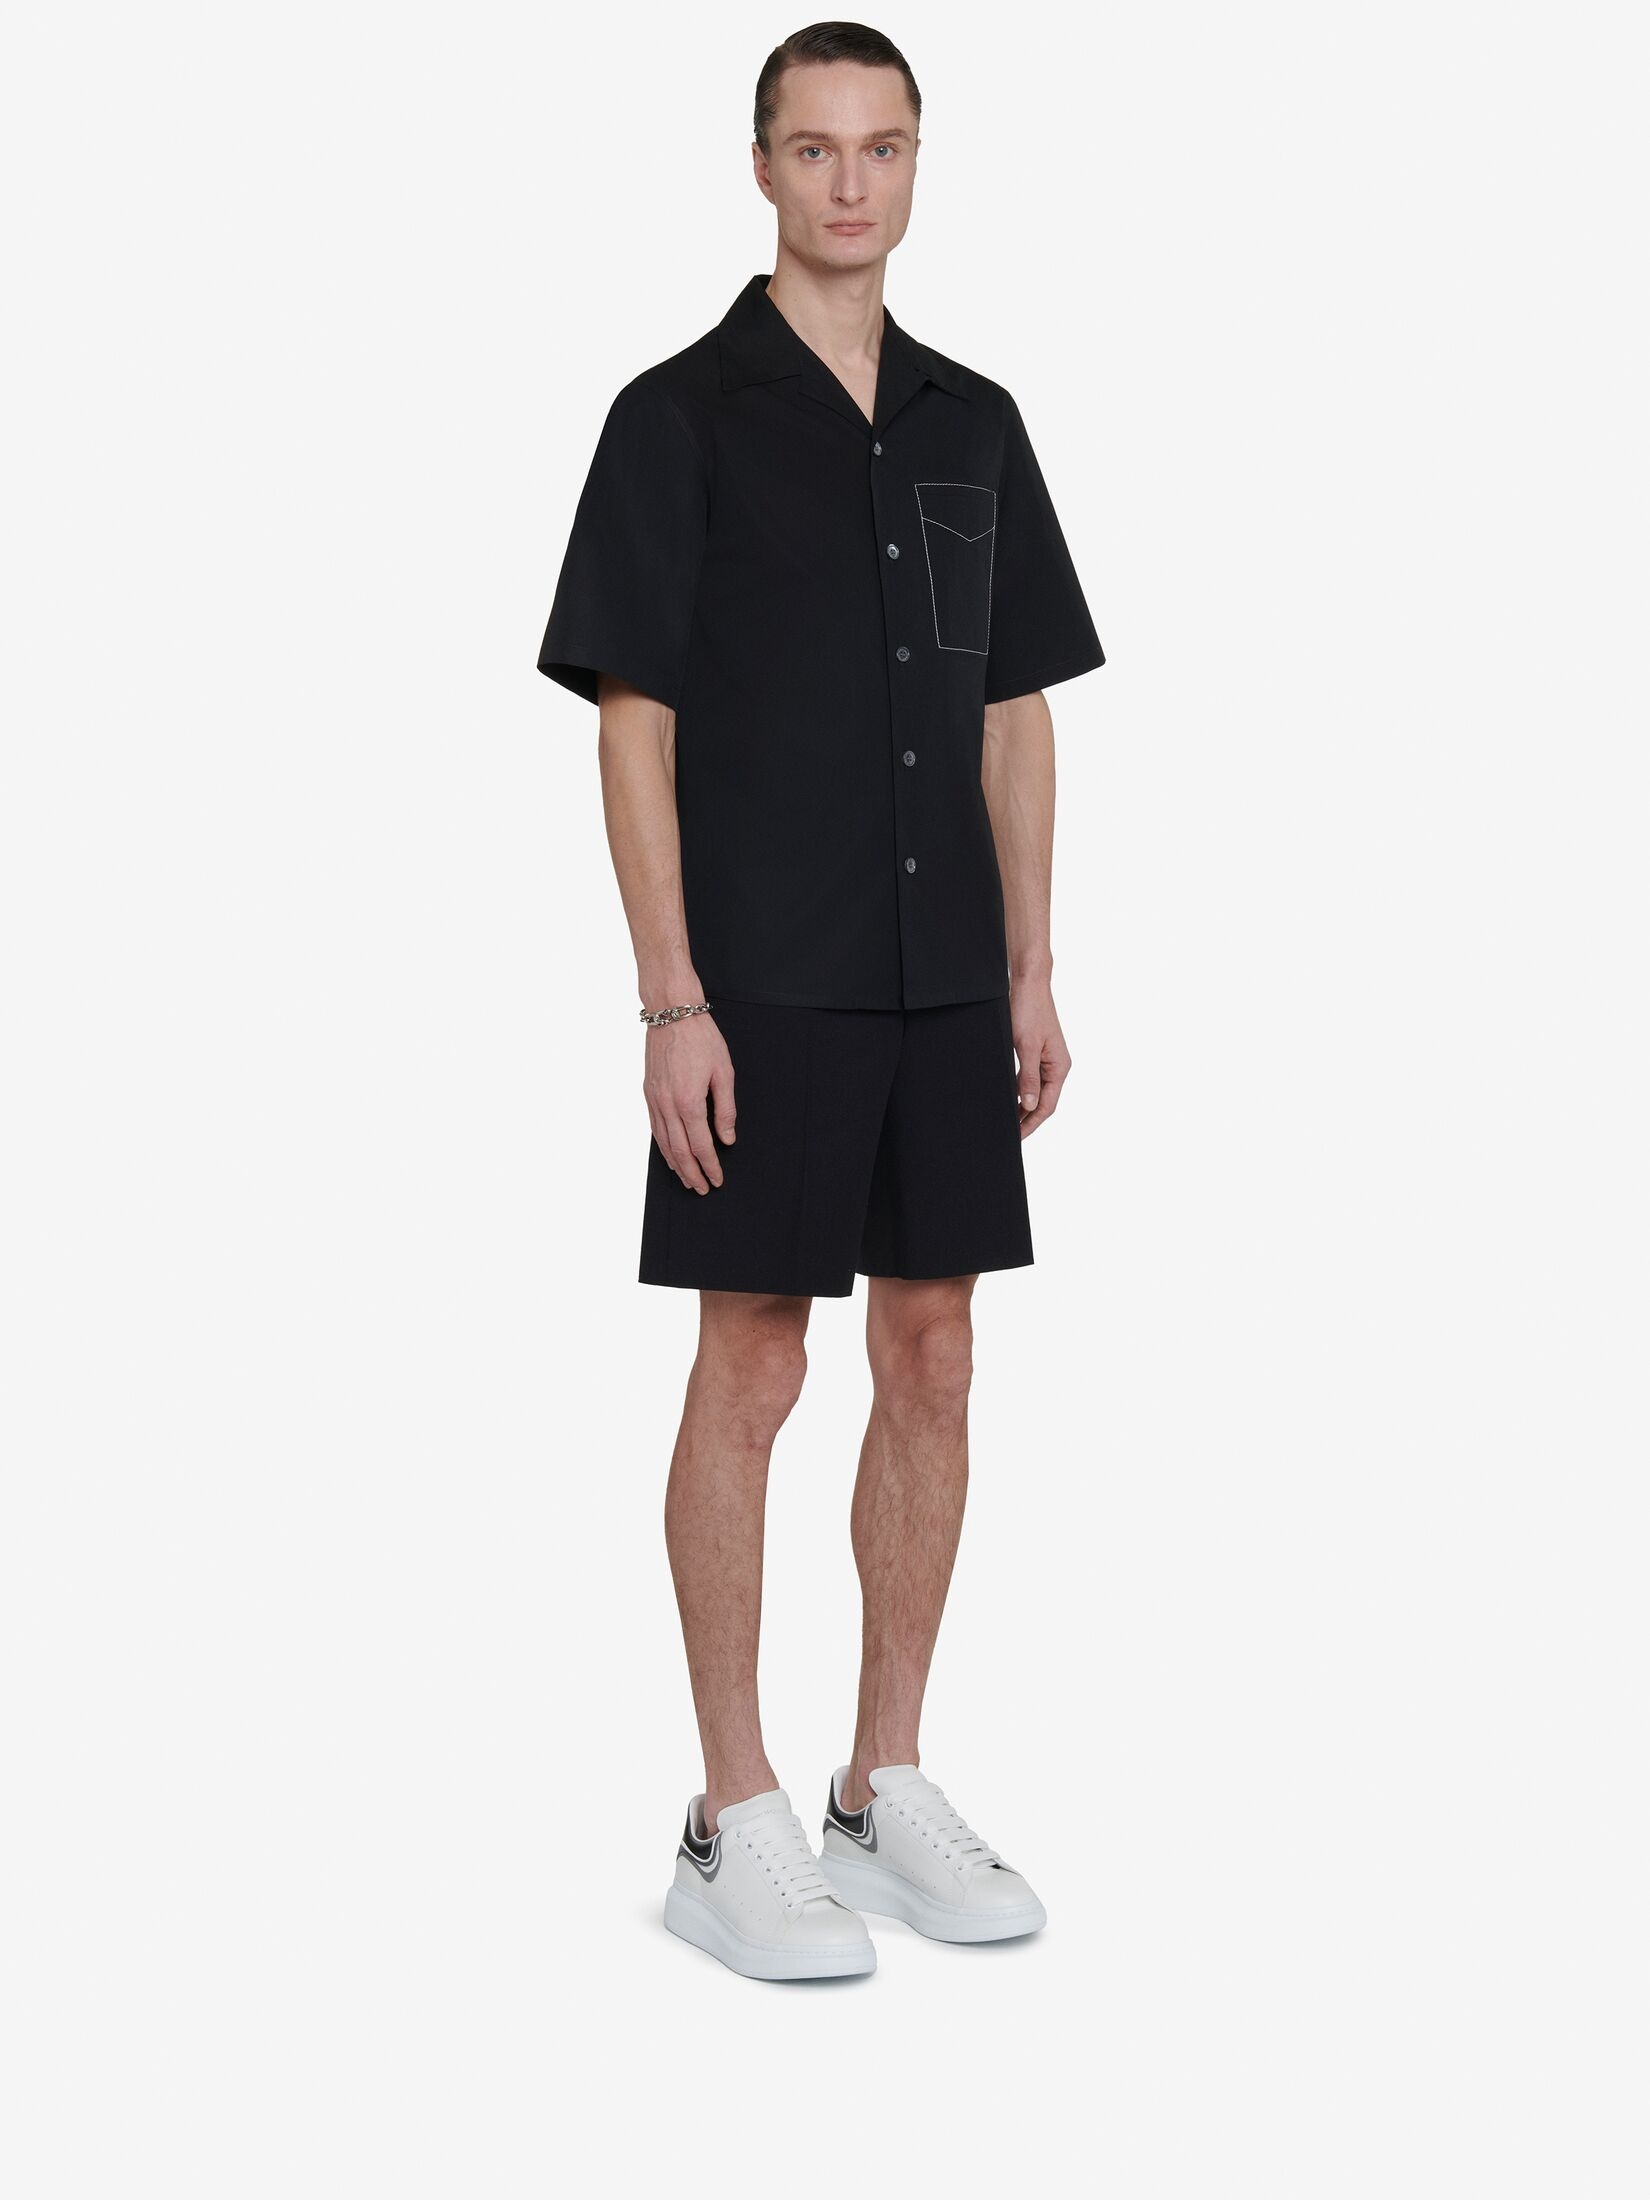 Men's Contrast Stitch Hawaiian Shirt in Black - 3